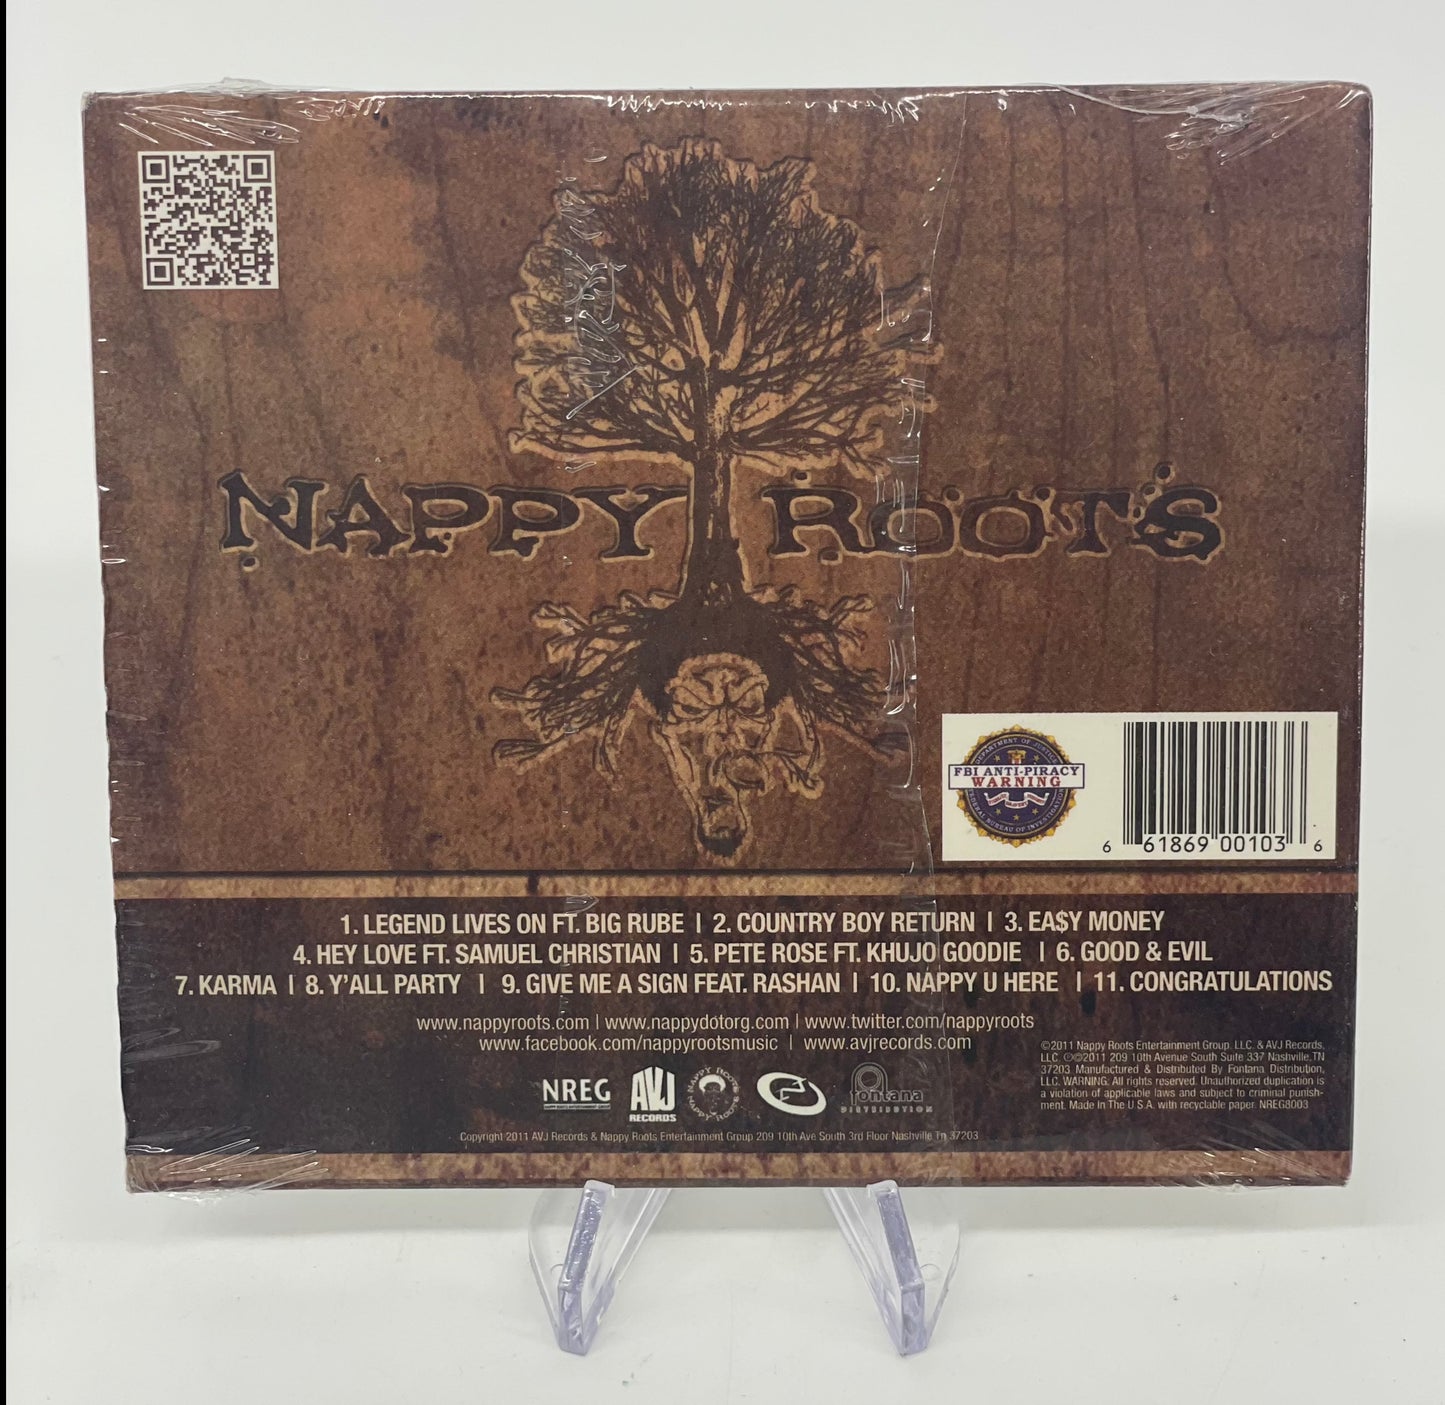 Nappy Roots - Nappy Dot Org CD